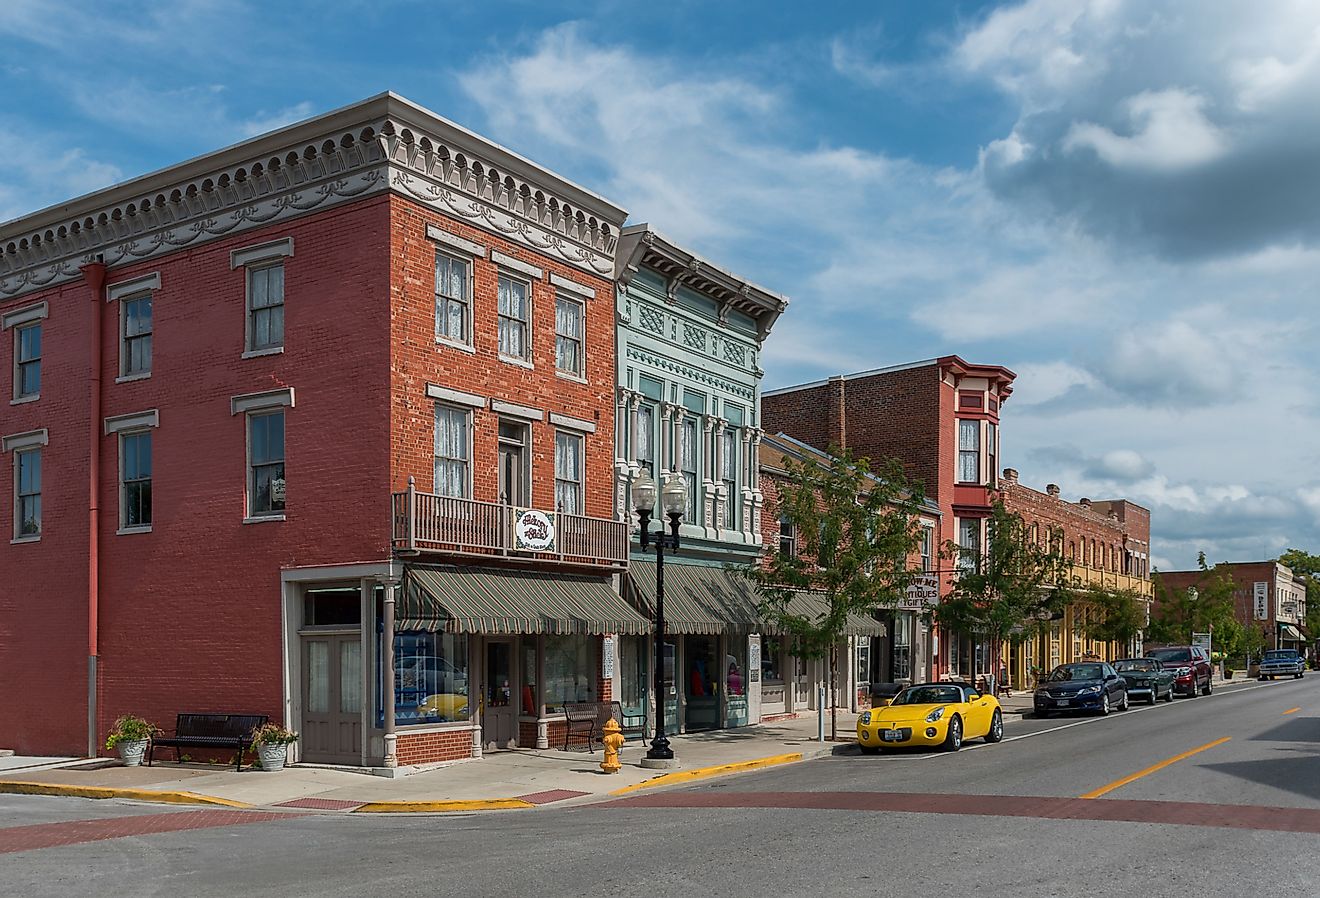 North Main Street Historic District in Hannibal, Missouri. Image credit Nagel Photography via Shutterstock